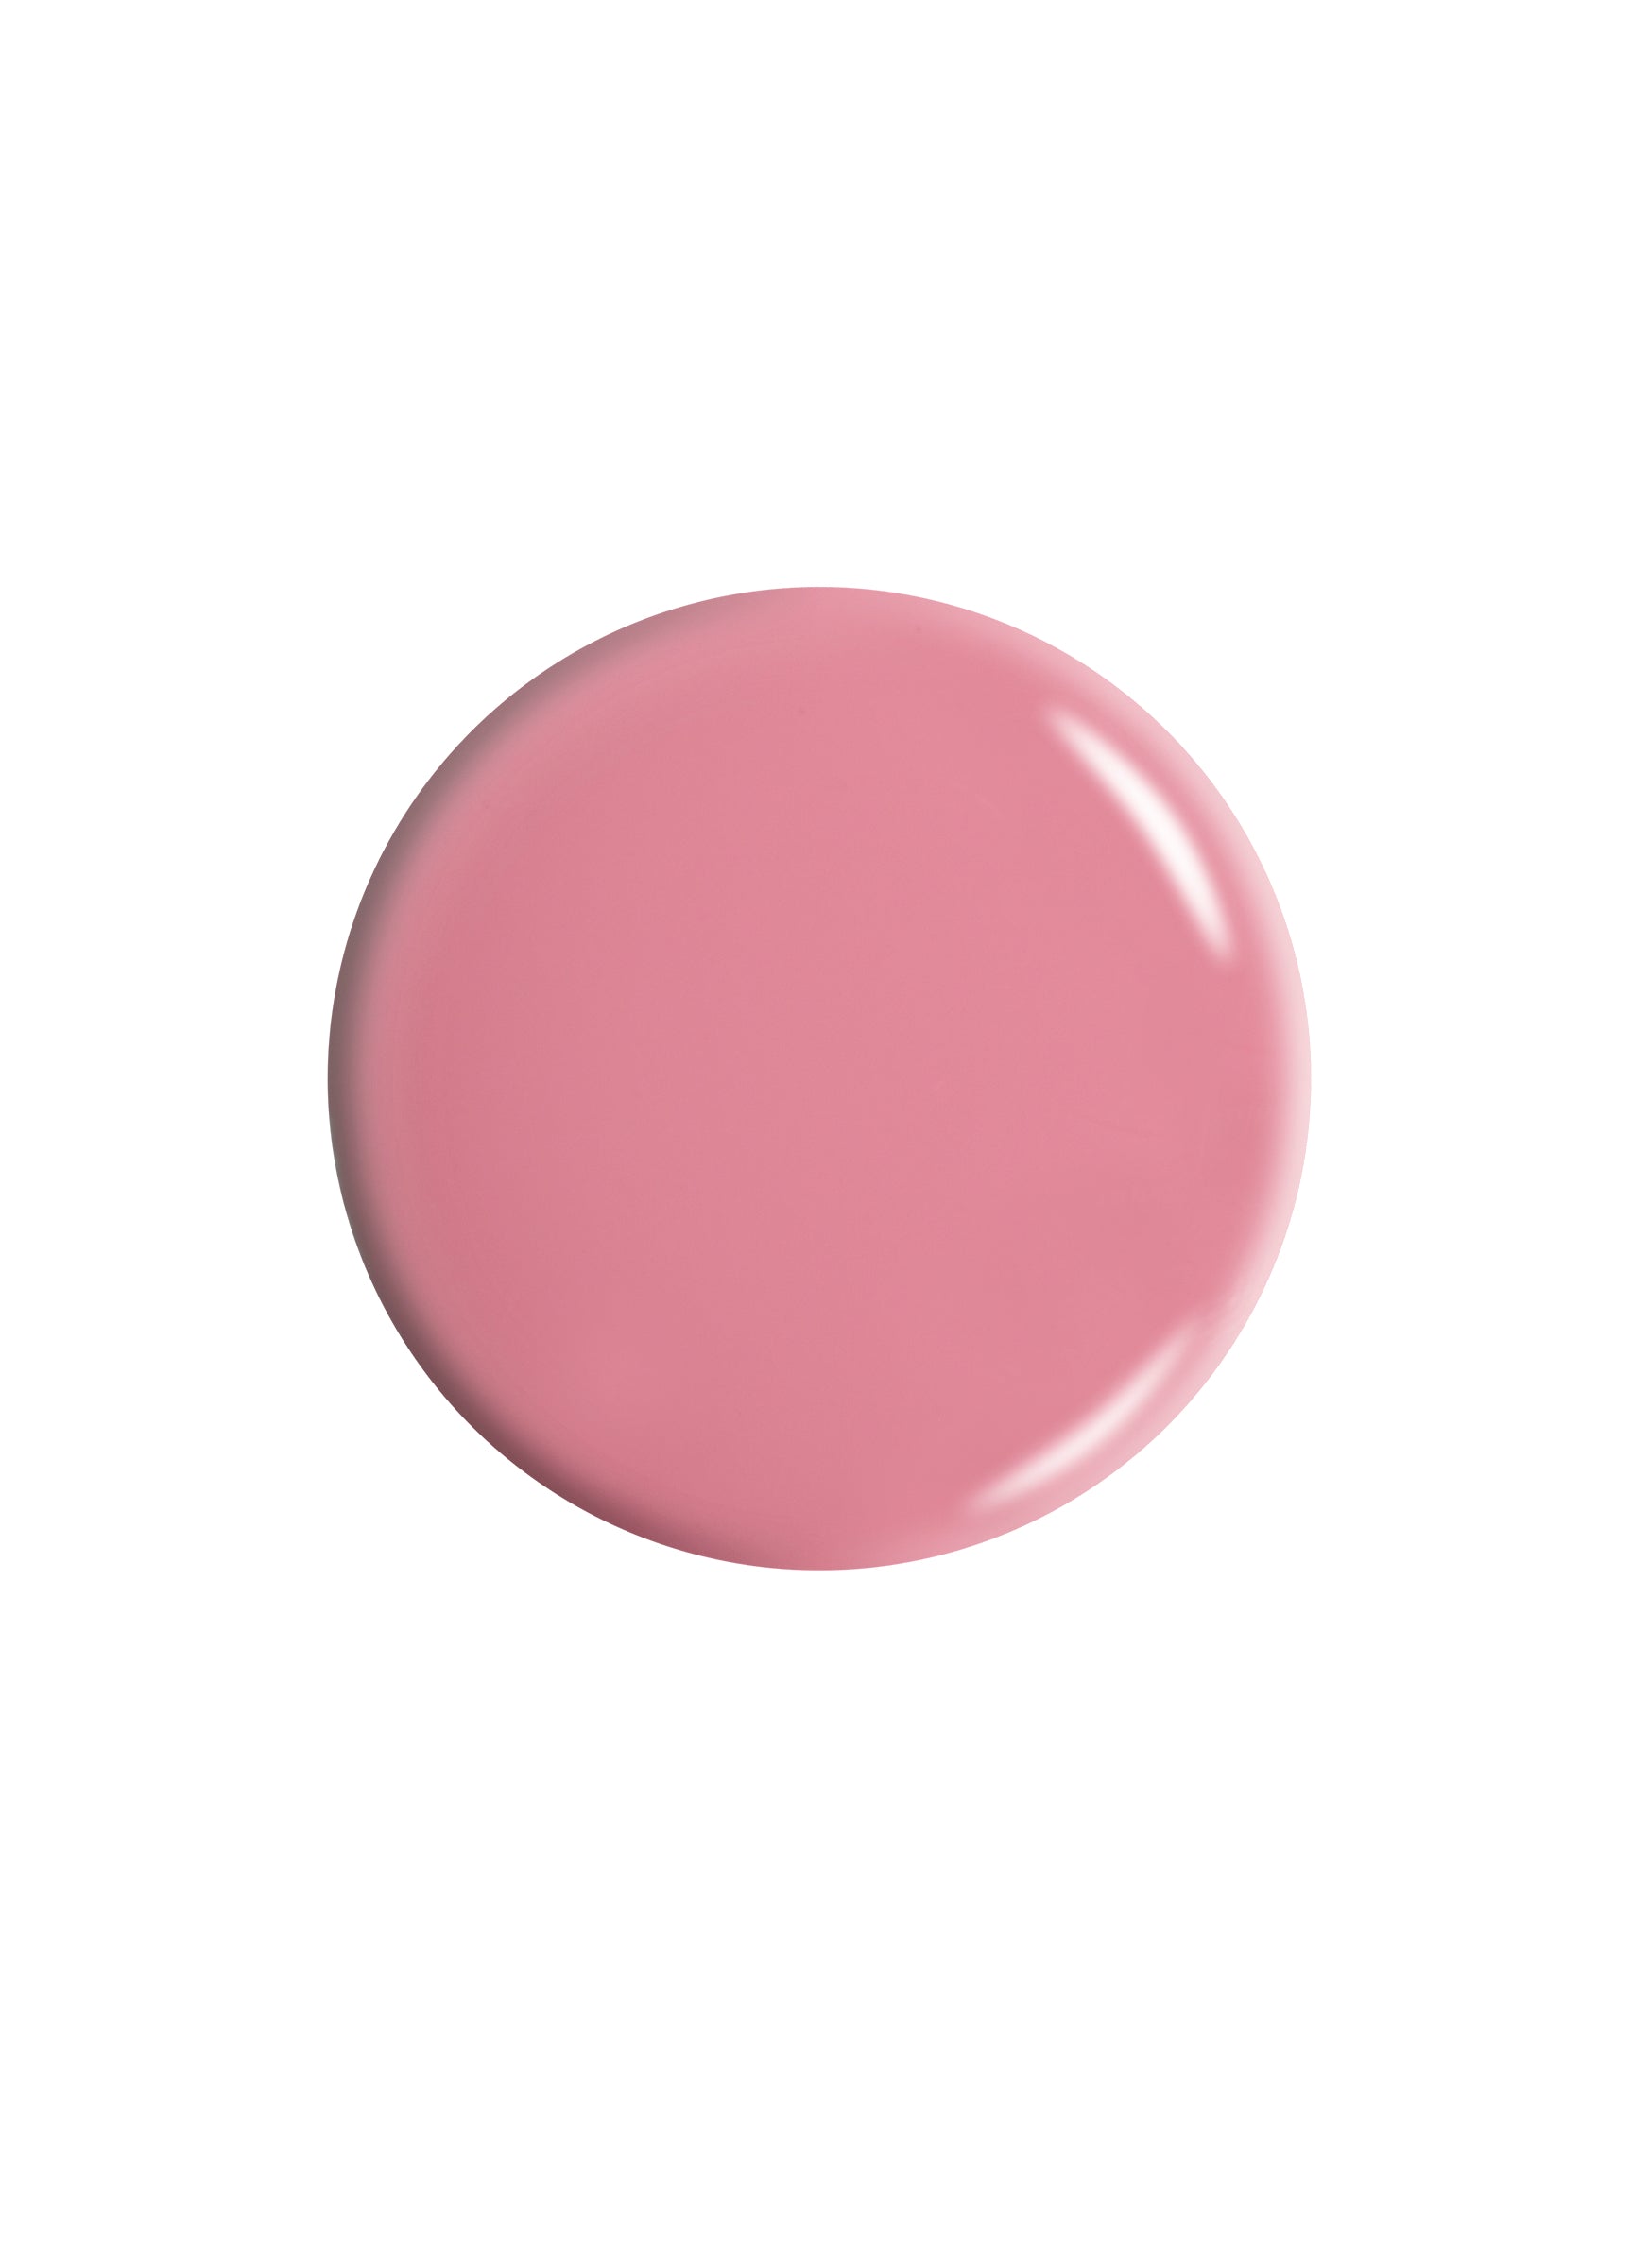 Dr.'s REMEDY Enriched Nail Polish / POSITIVE Pink (creme) 15ml